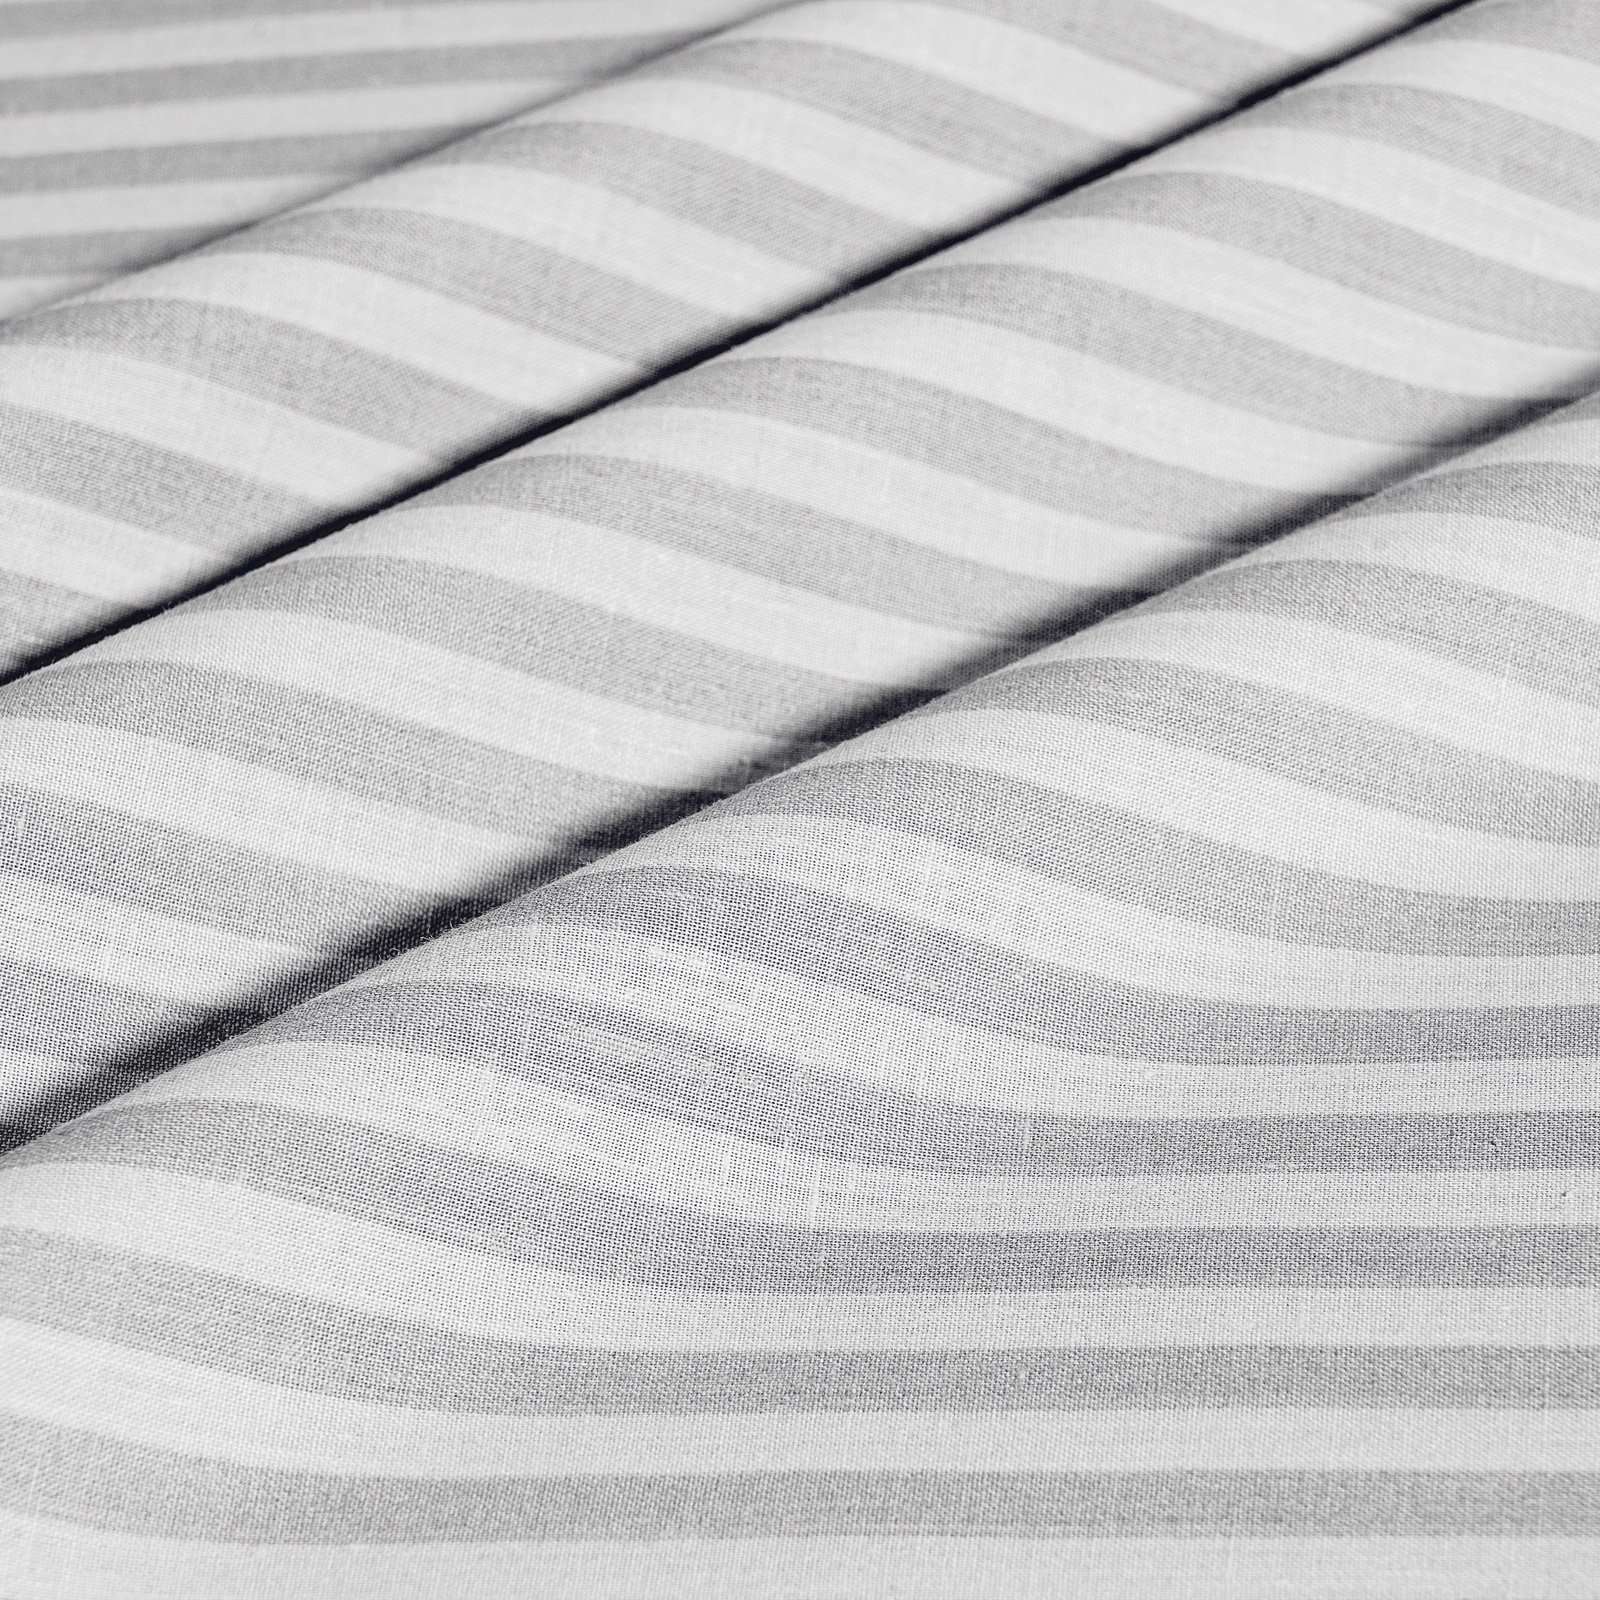 Пододеяльник Medsleep Линдау светло-серый 200х215 см - фото 4